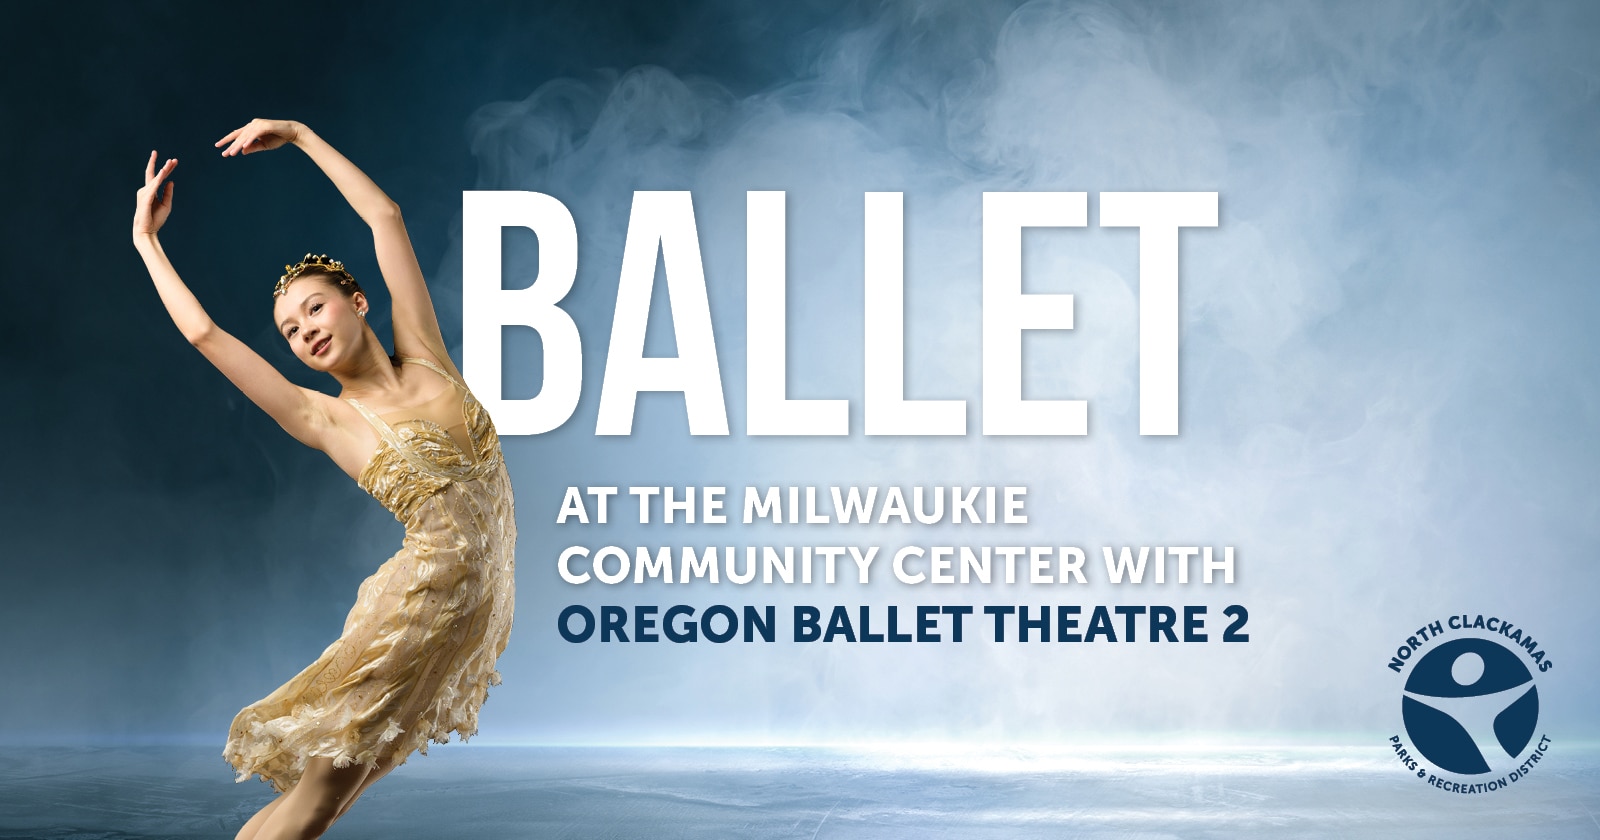 Oregon Ballet Theatre 2